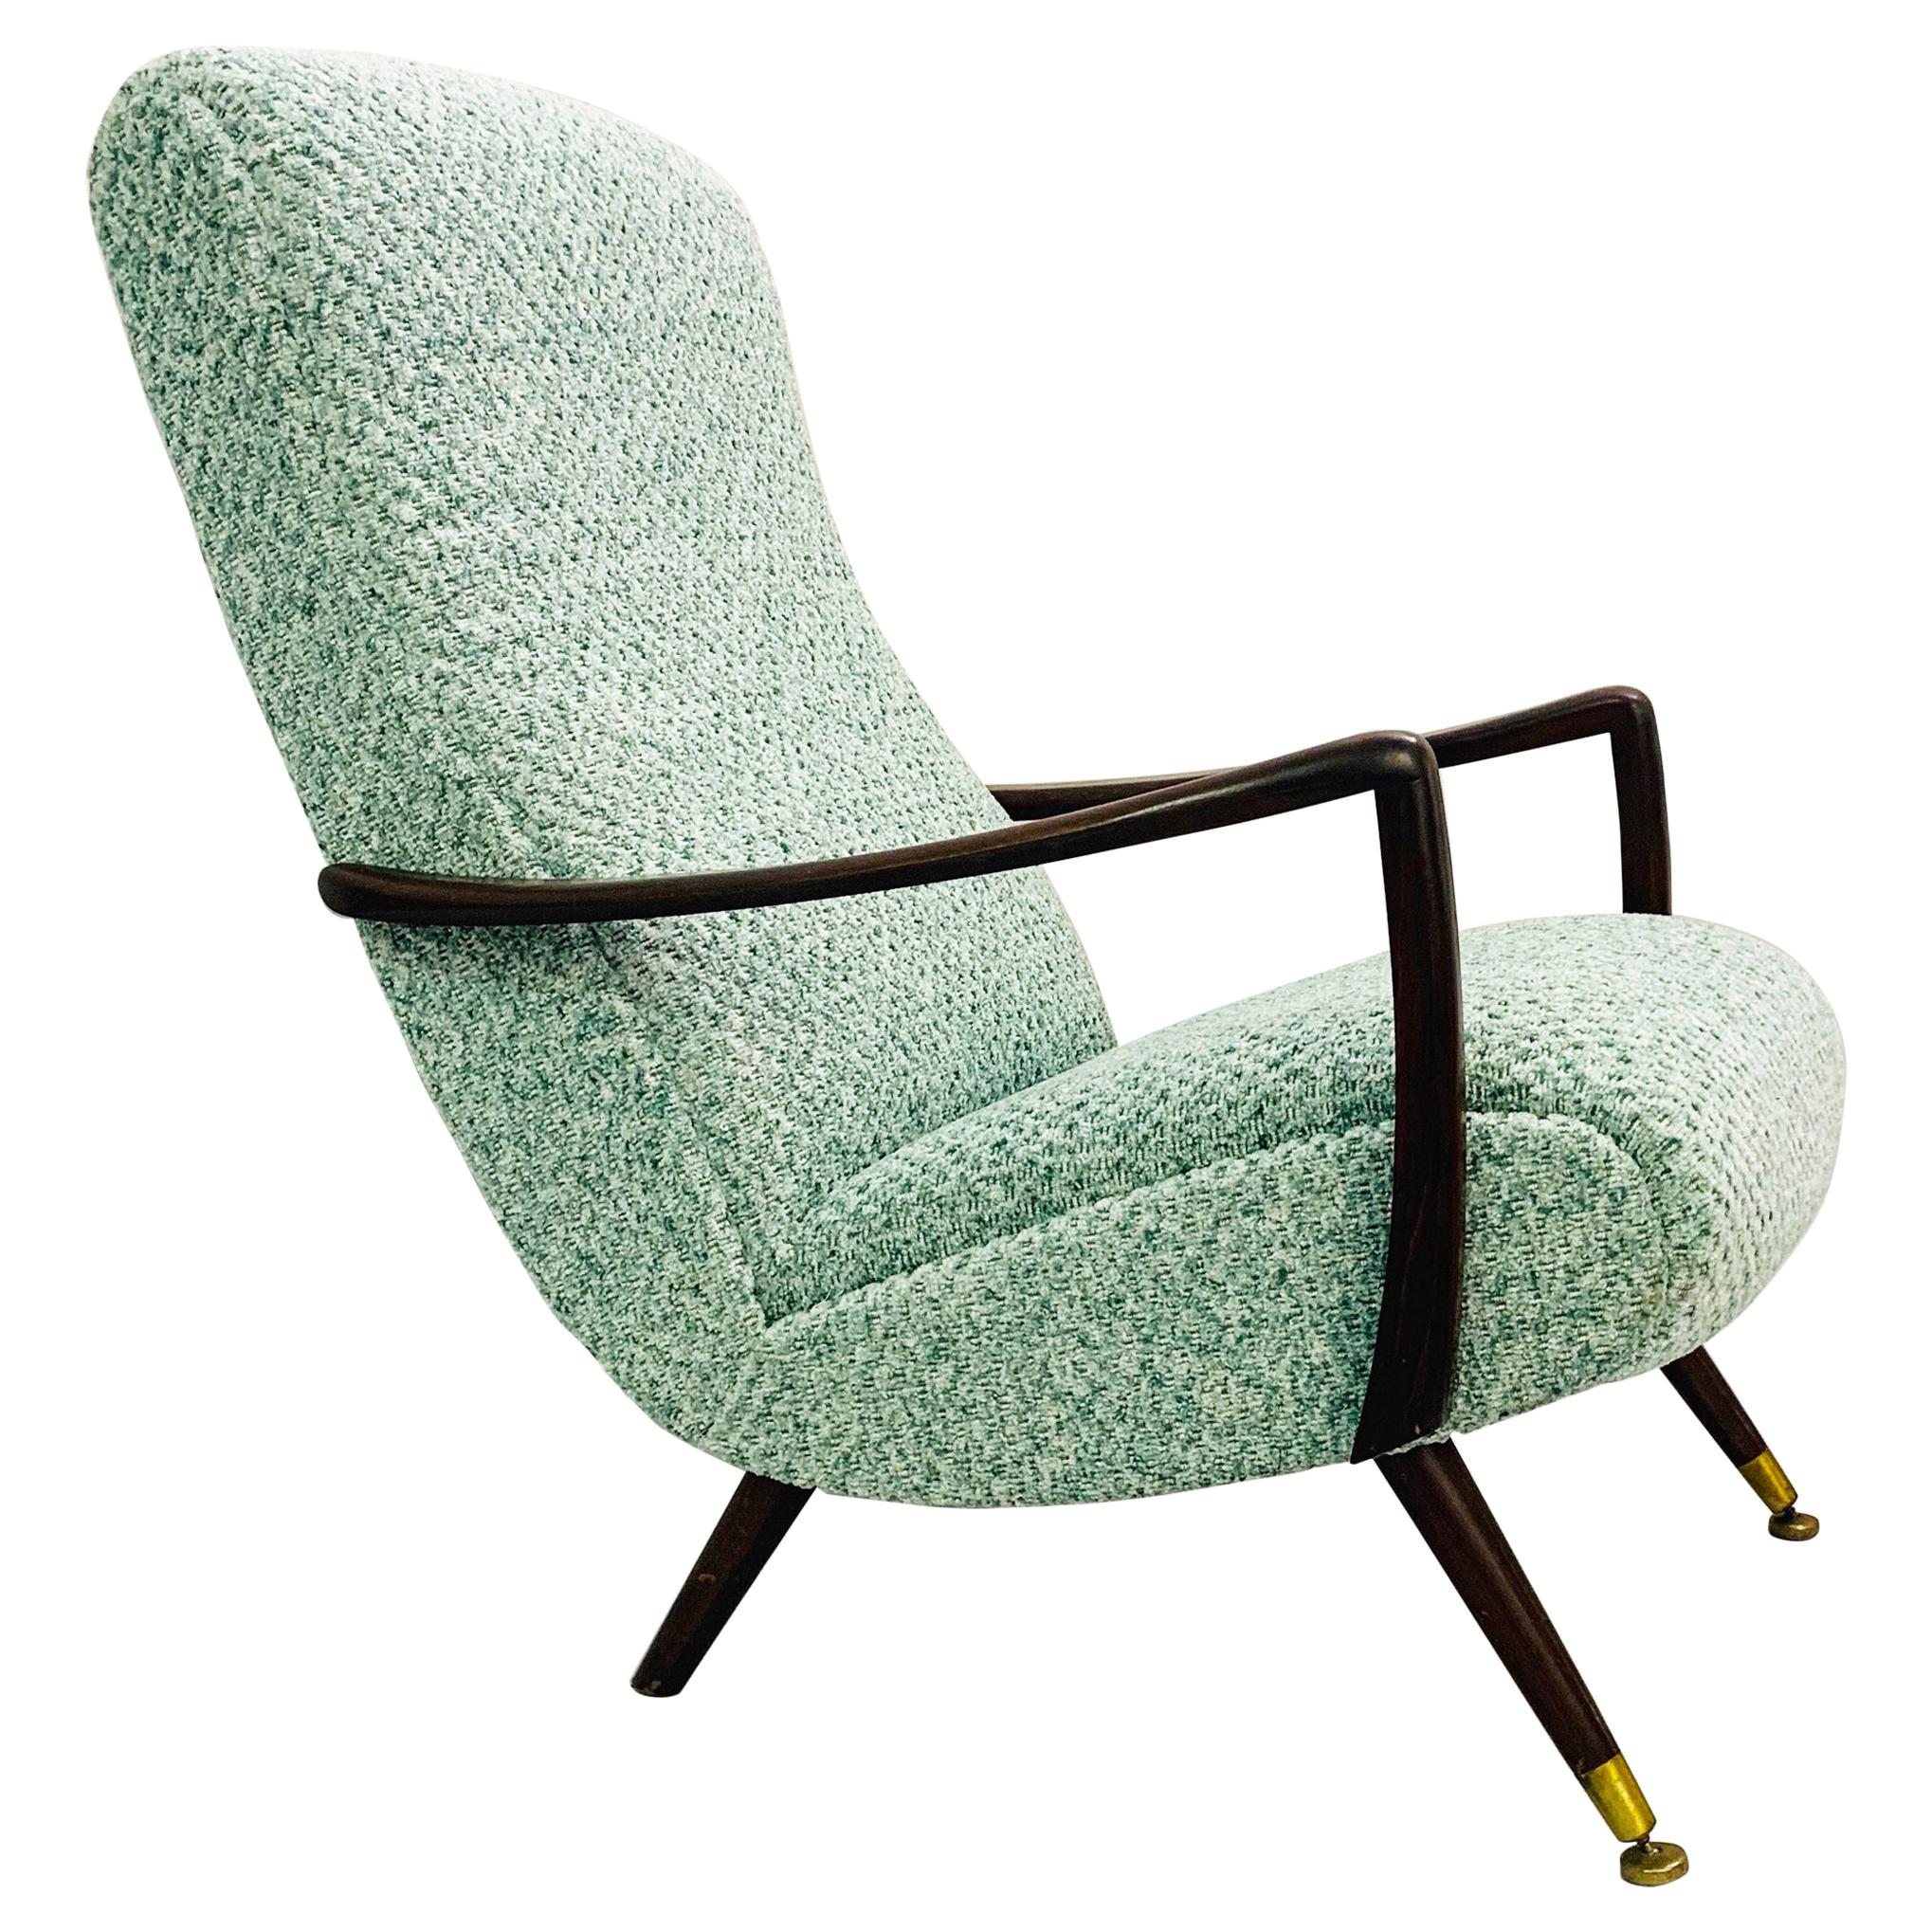 Pair of italian Italian armchair - New upholstery  c.1950s